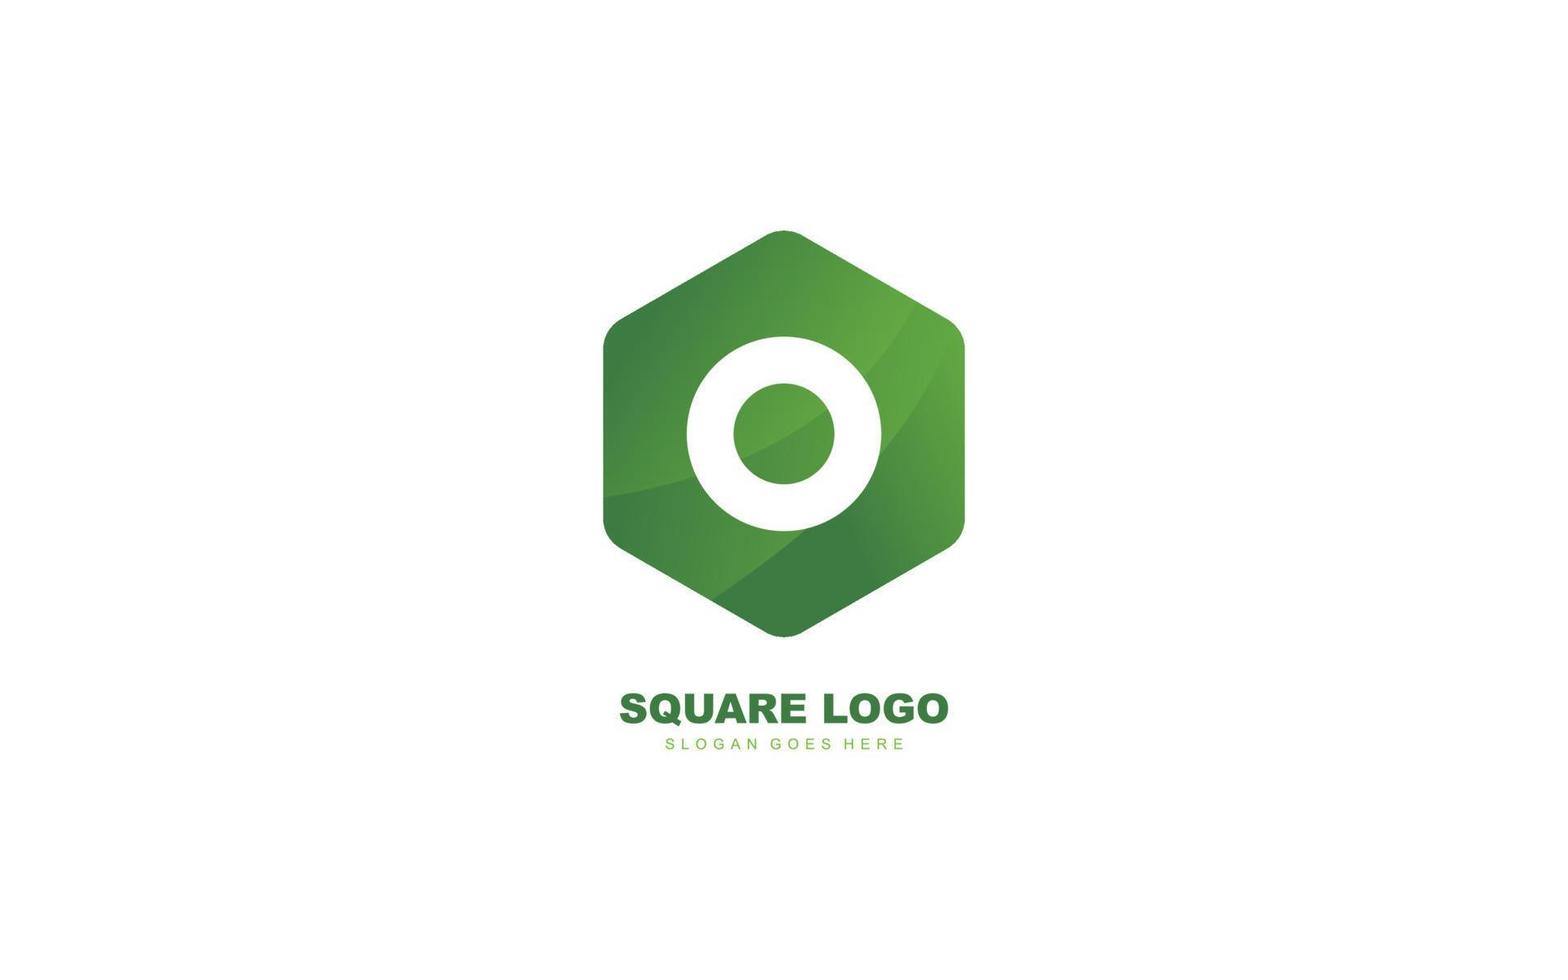 O logo shape for identity. letter template vector illustration for your brand.